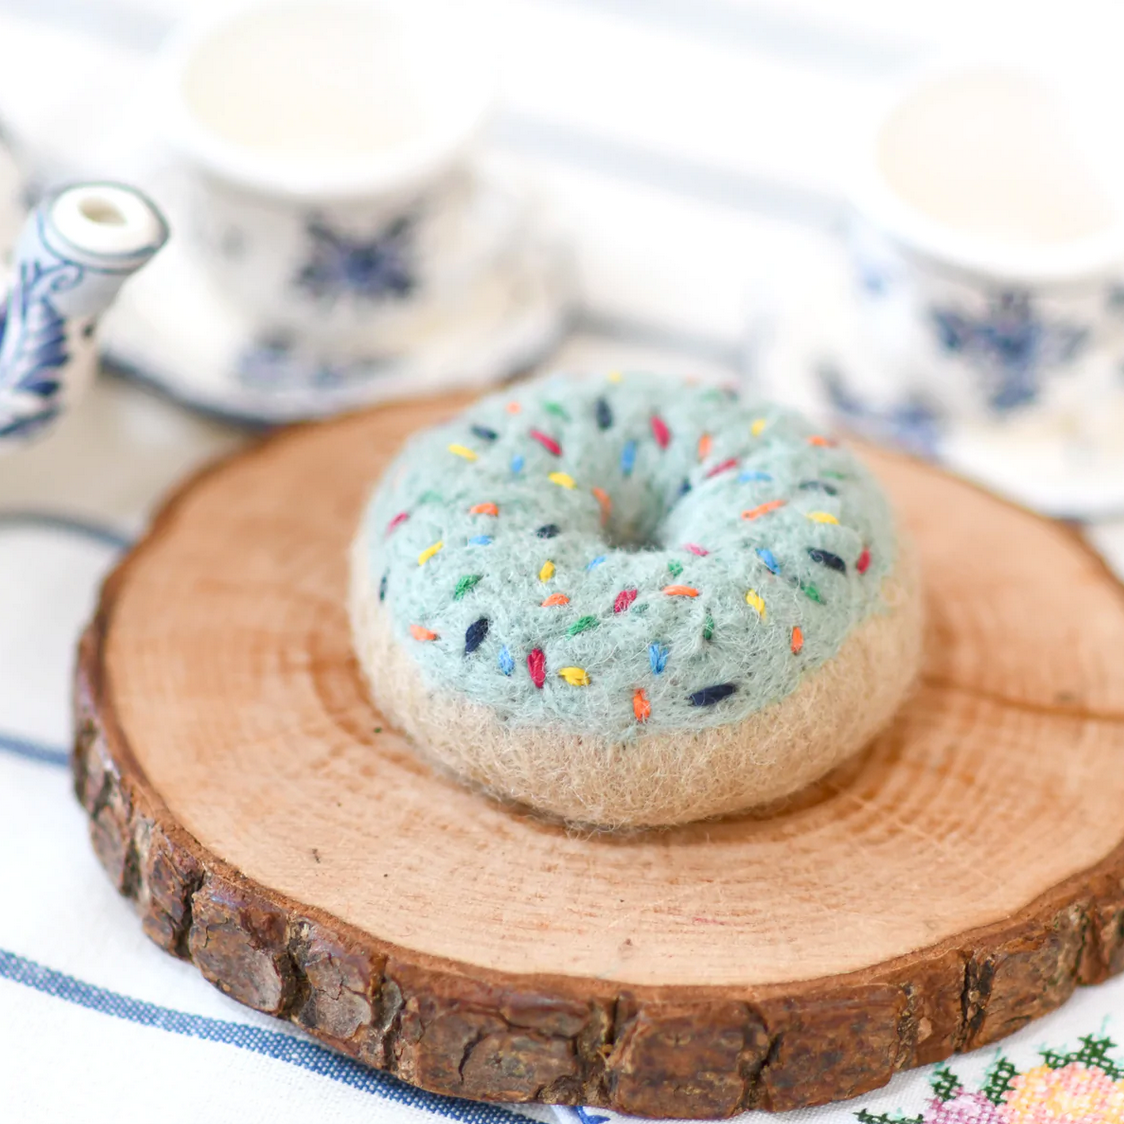 Felt Doughnut (Donut) with Blue Vanilla Frosting and Rainbow Sprinkles